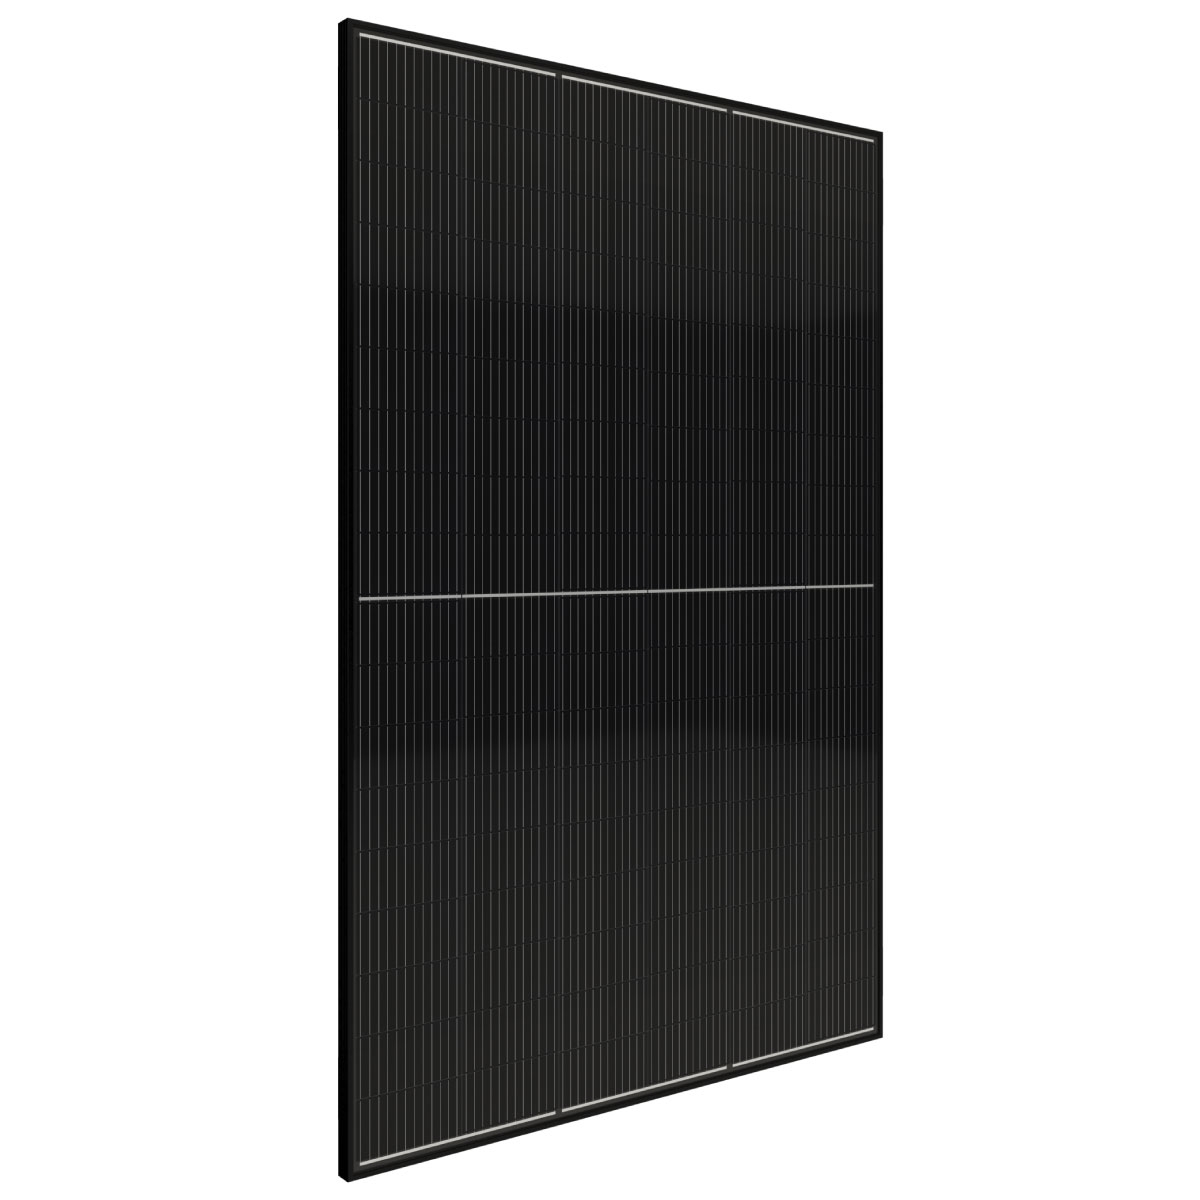 TommaTech 410Wp 108PM M10 Dark Series Solar Panel